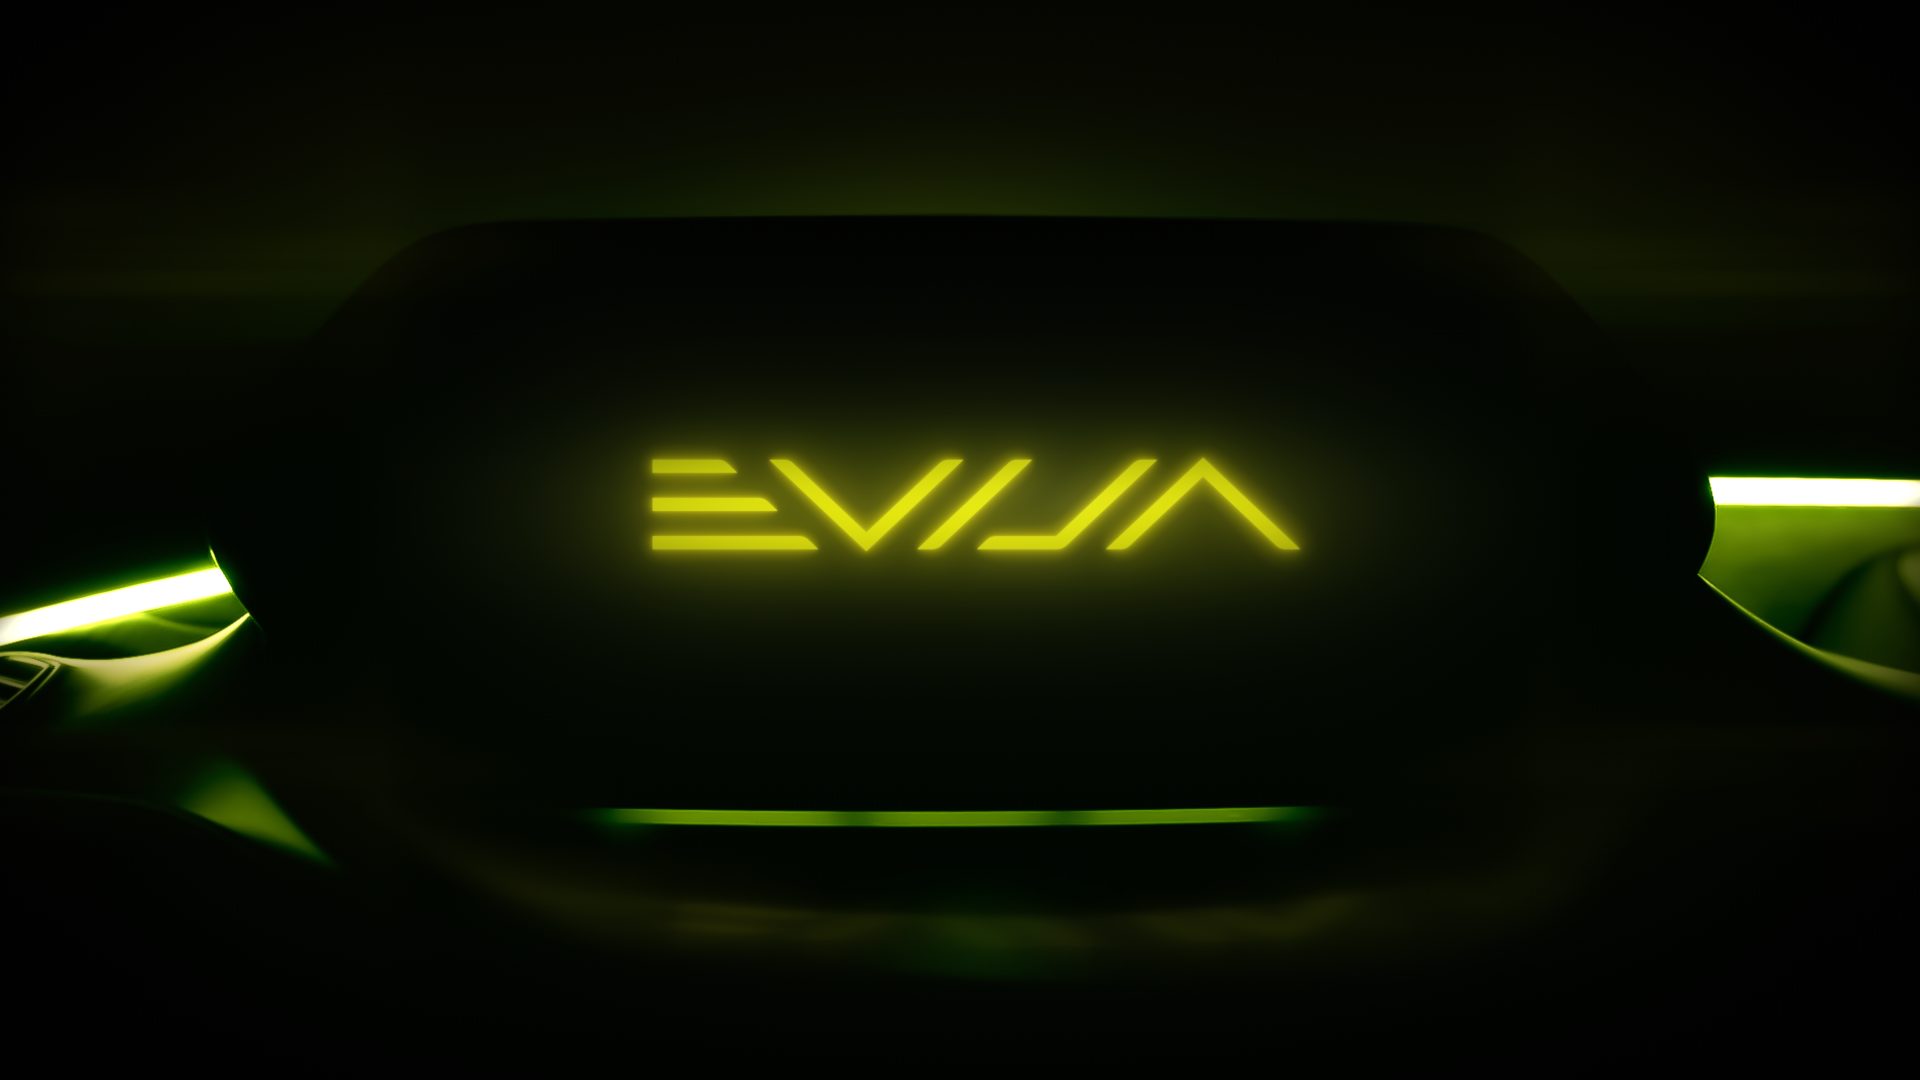 Lotus Evija hypercar name revealed at Goodwood FOS